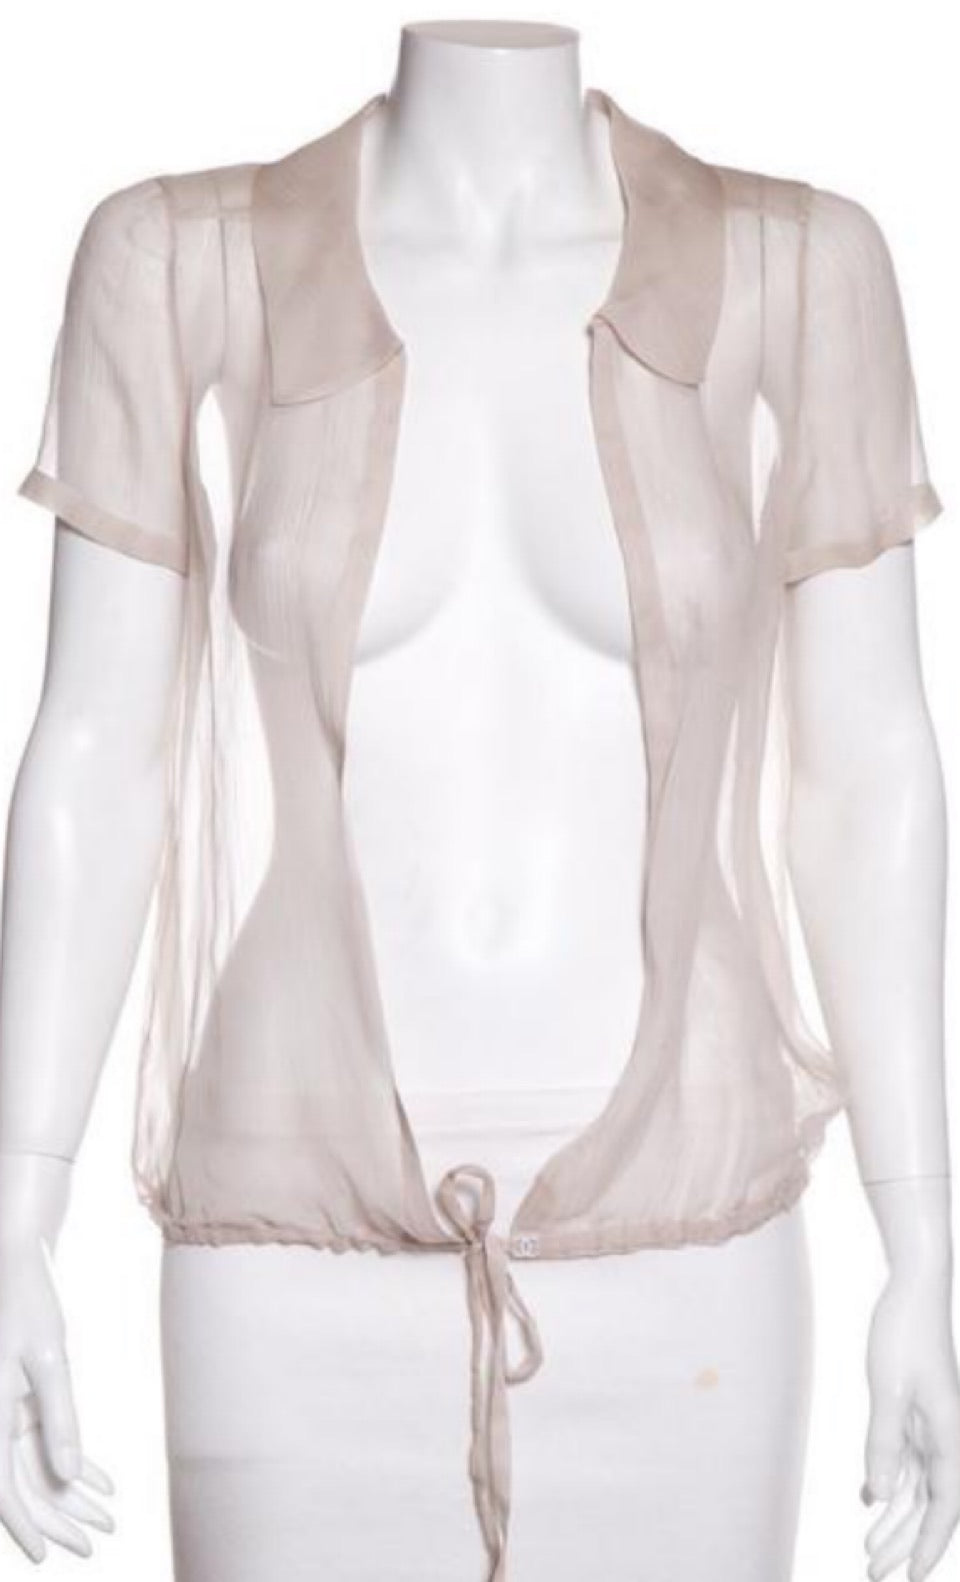 HelensChanel Chanel 04c 2004 Cruise Silk Chiffon Short Sleeve Sheer Drawstring Beige Ecru Blouse Top FR 36 US 2/4